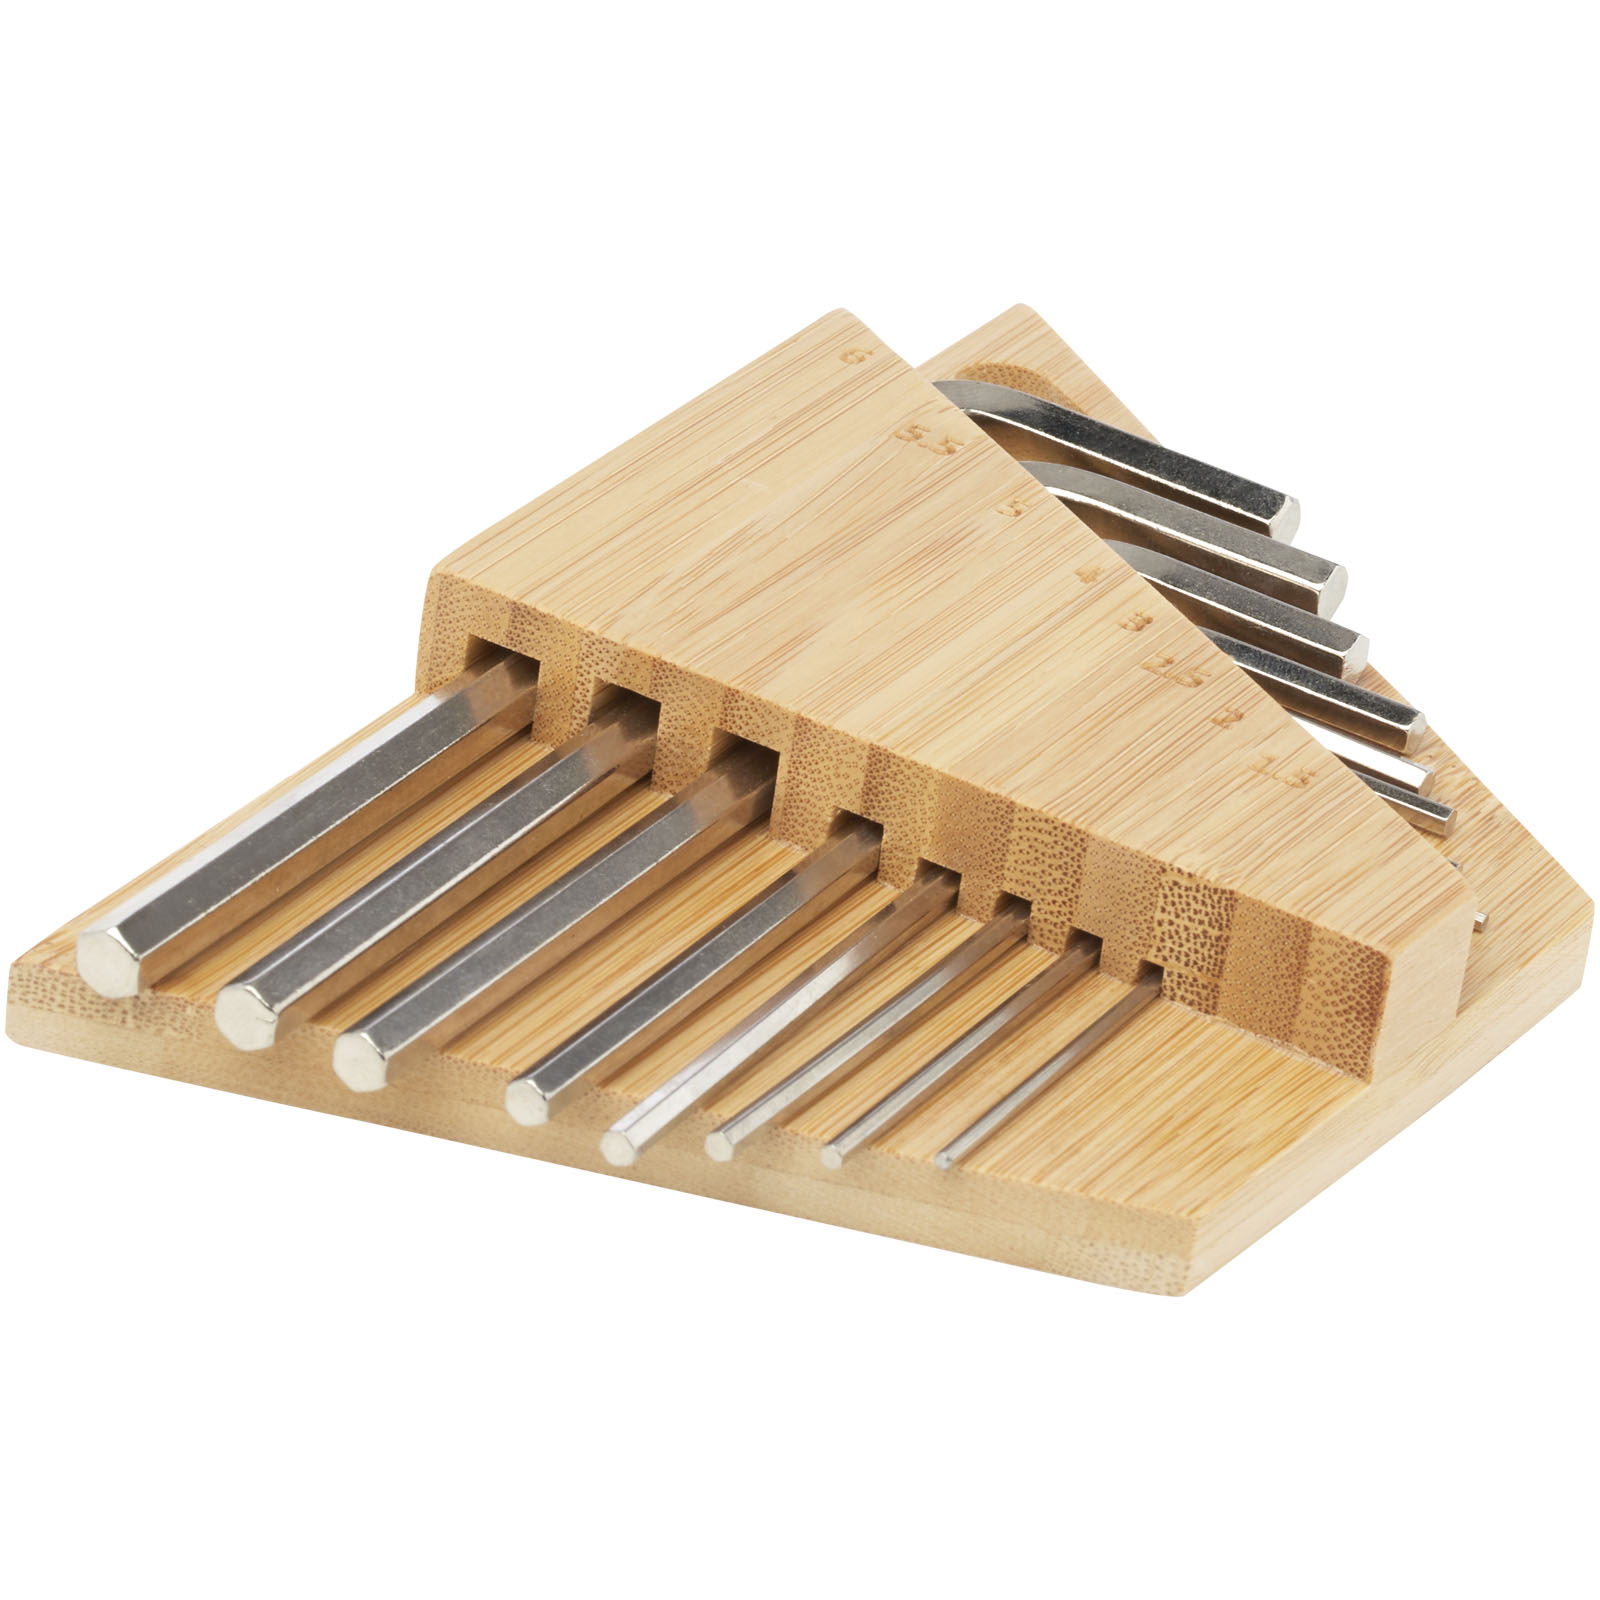 Advertising Tool sets - Allen bamboo hex key tool set - 0